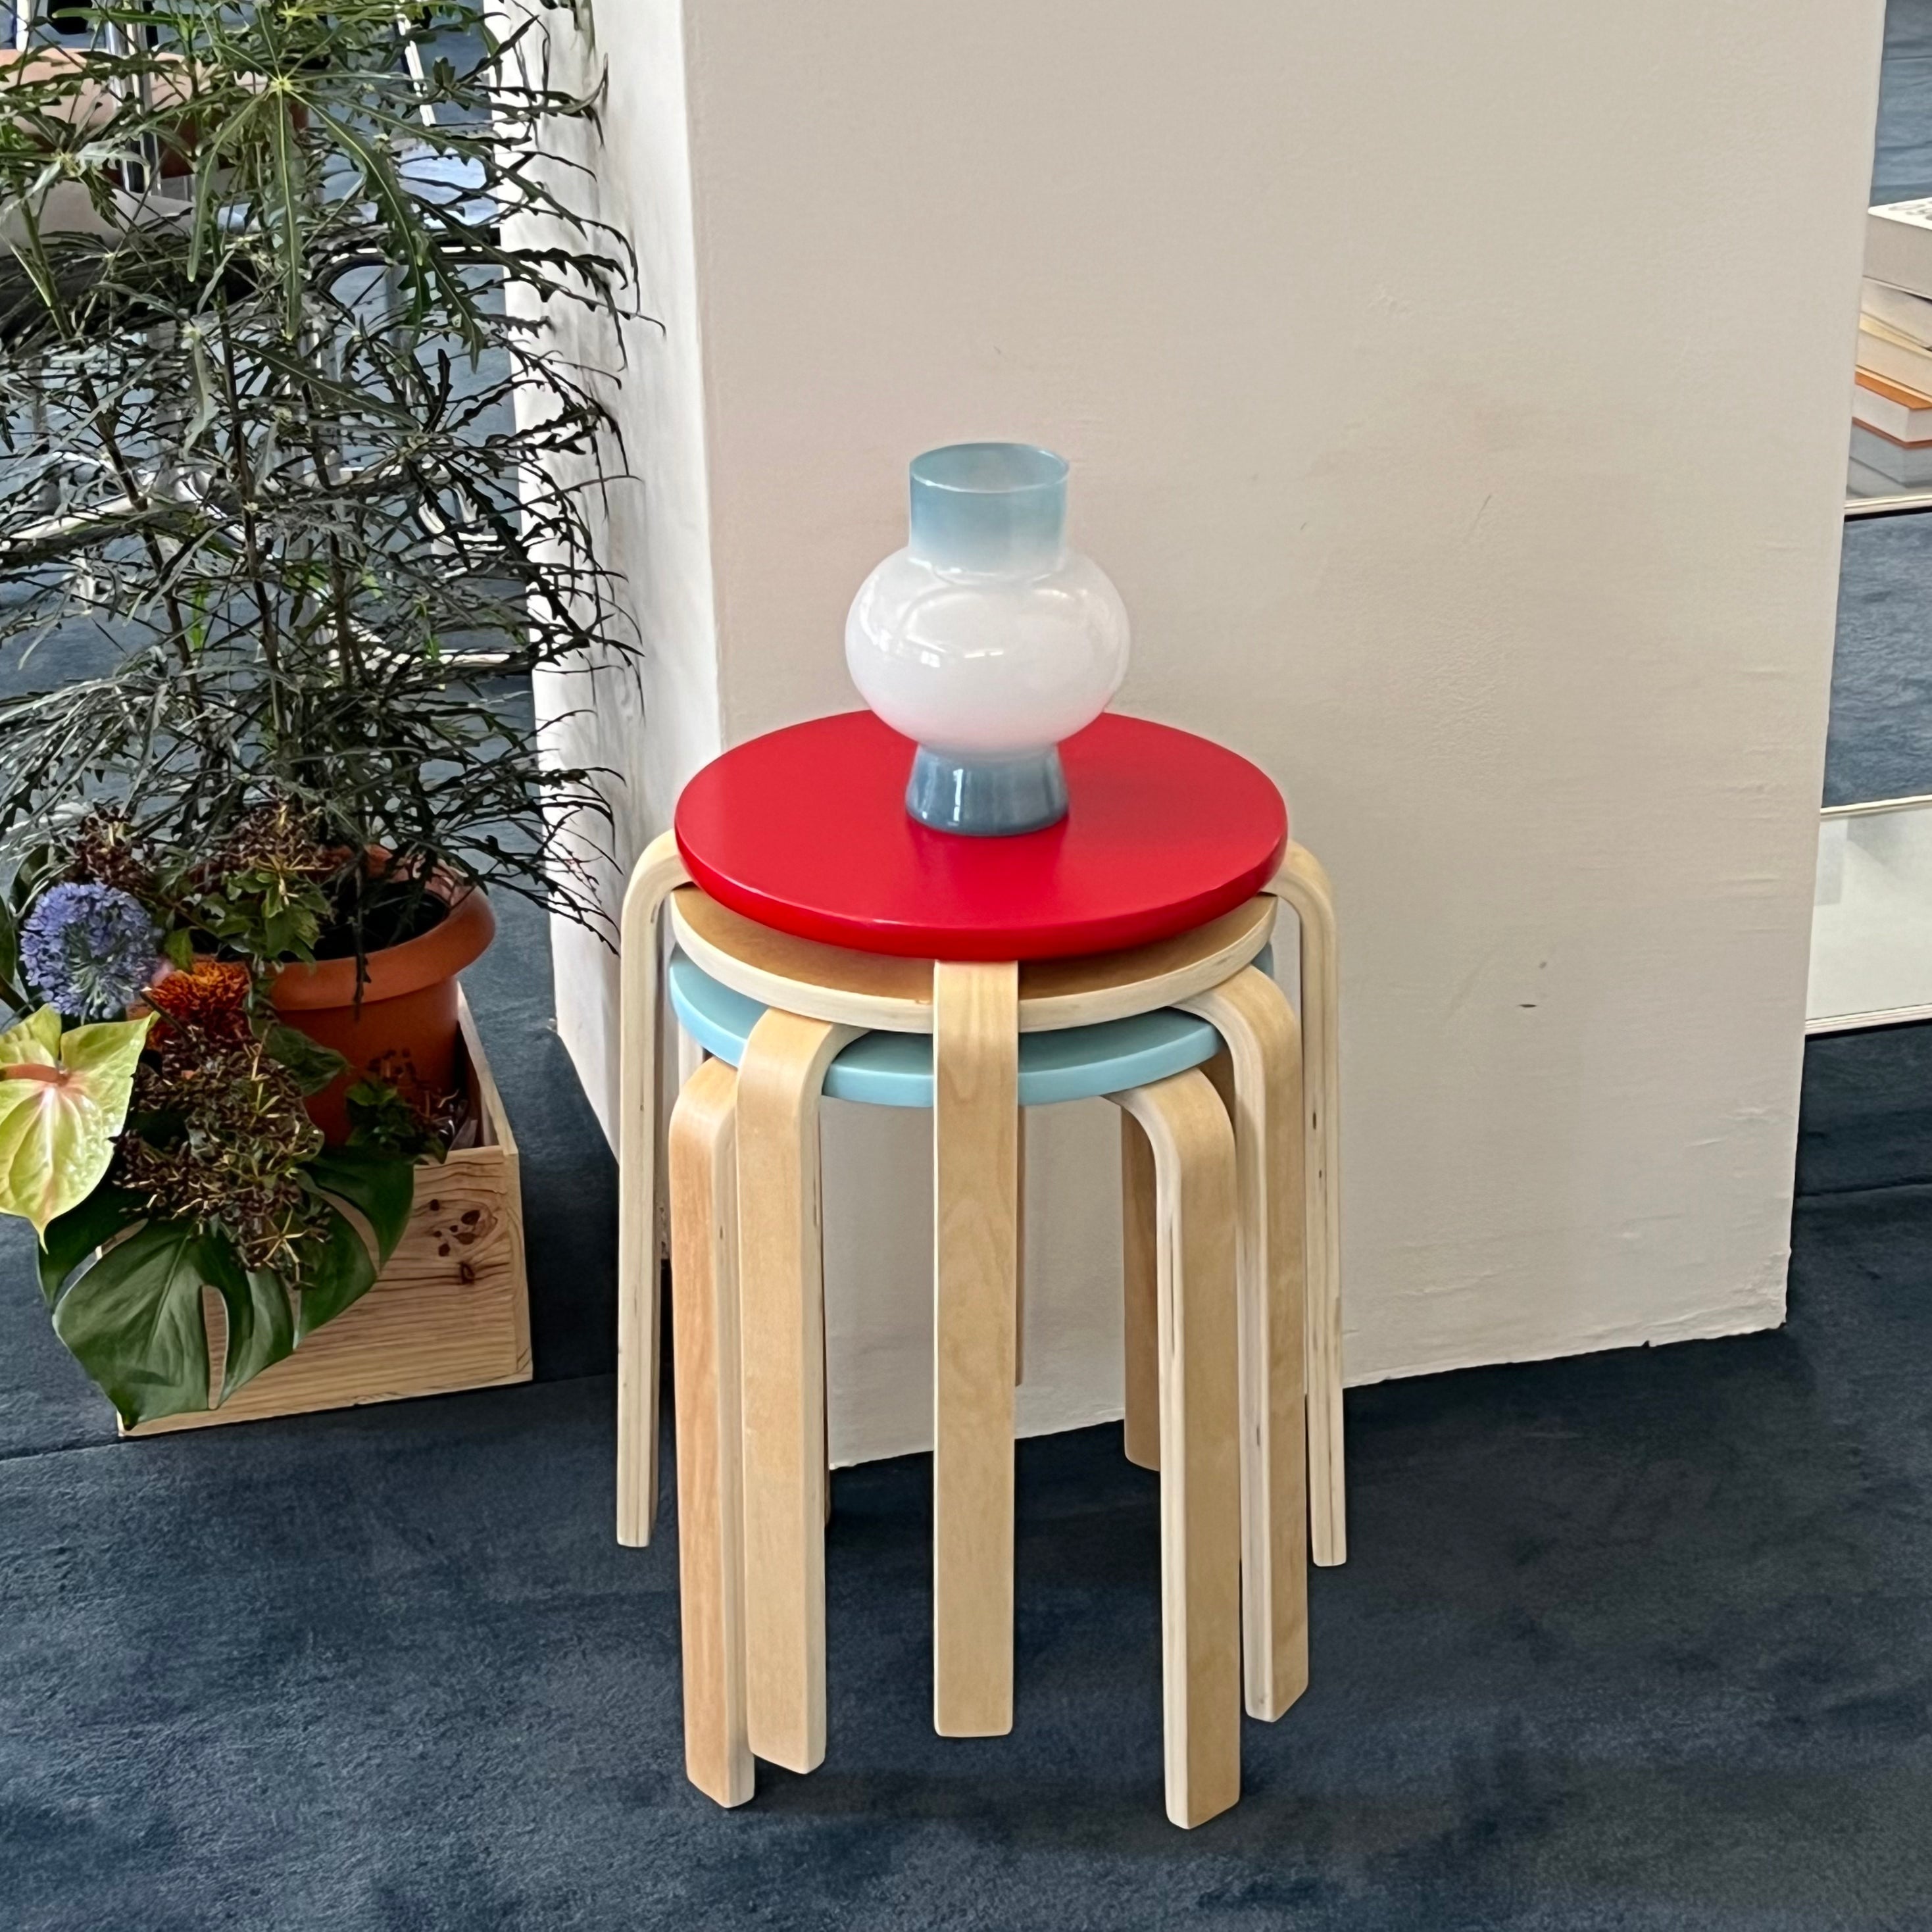 C53 Wood colorful stool